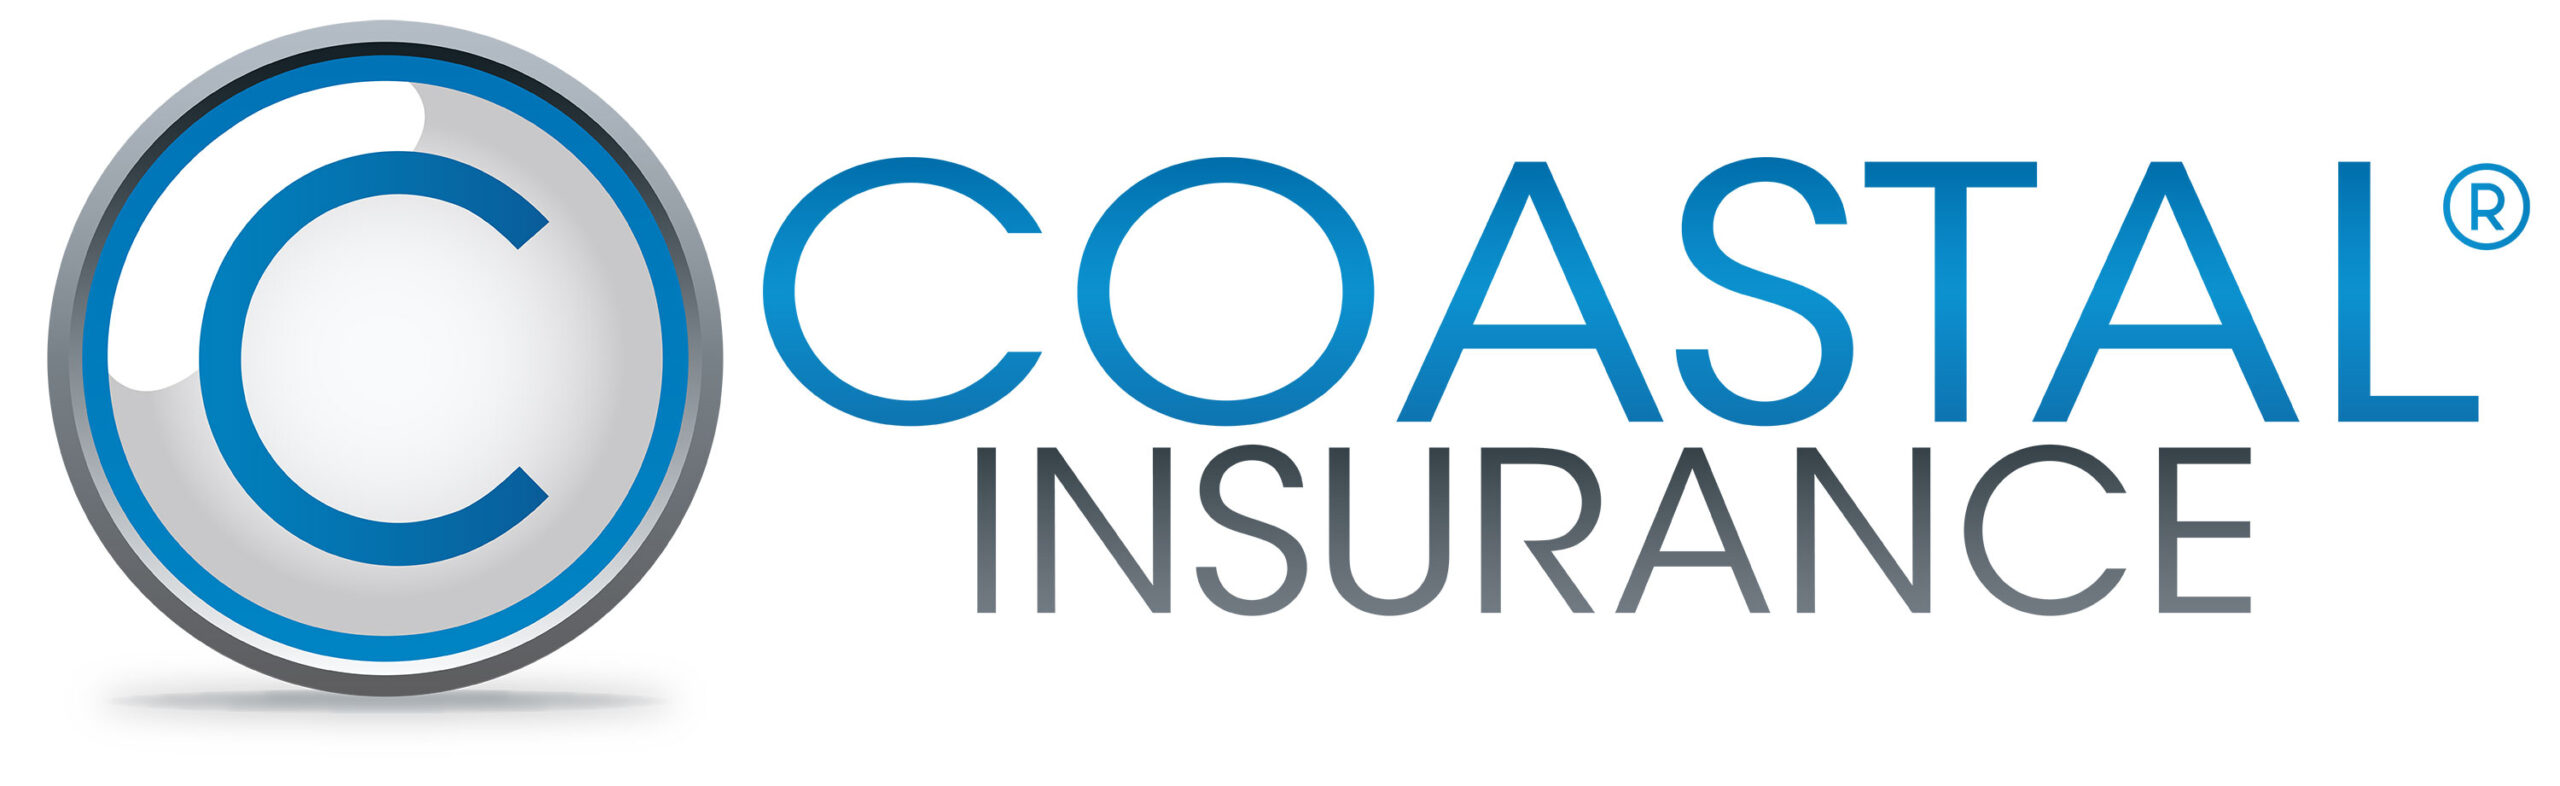 Coastal Insurance Combomark